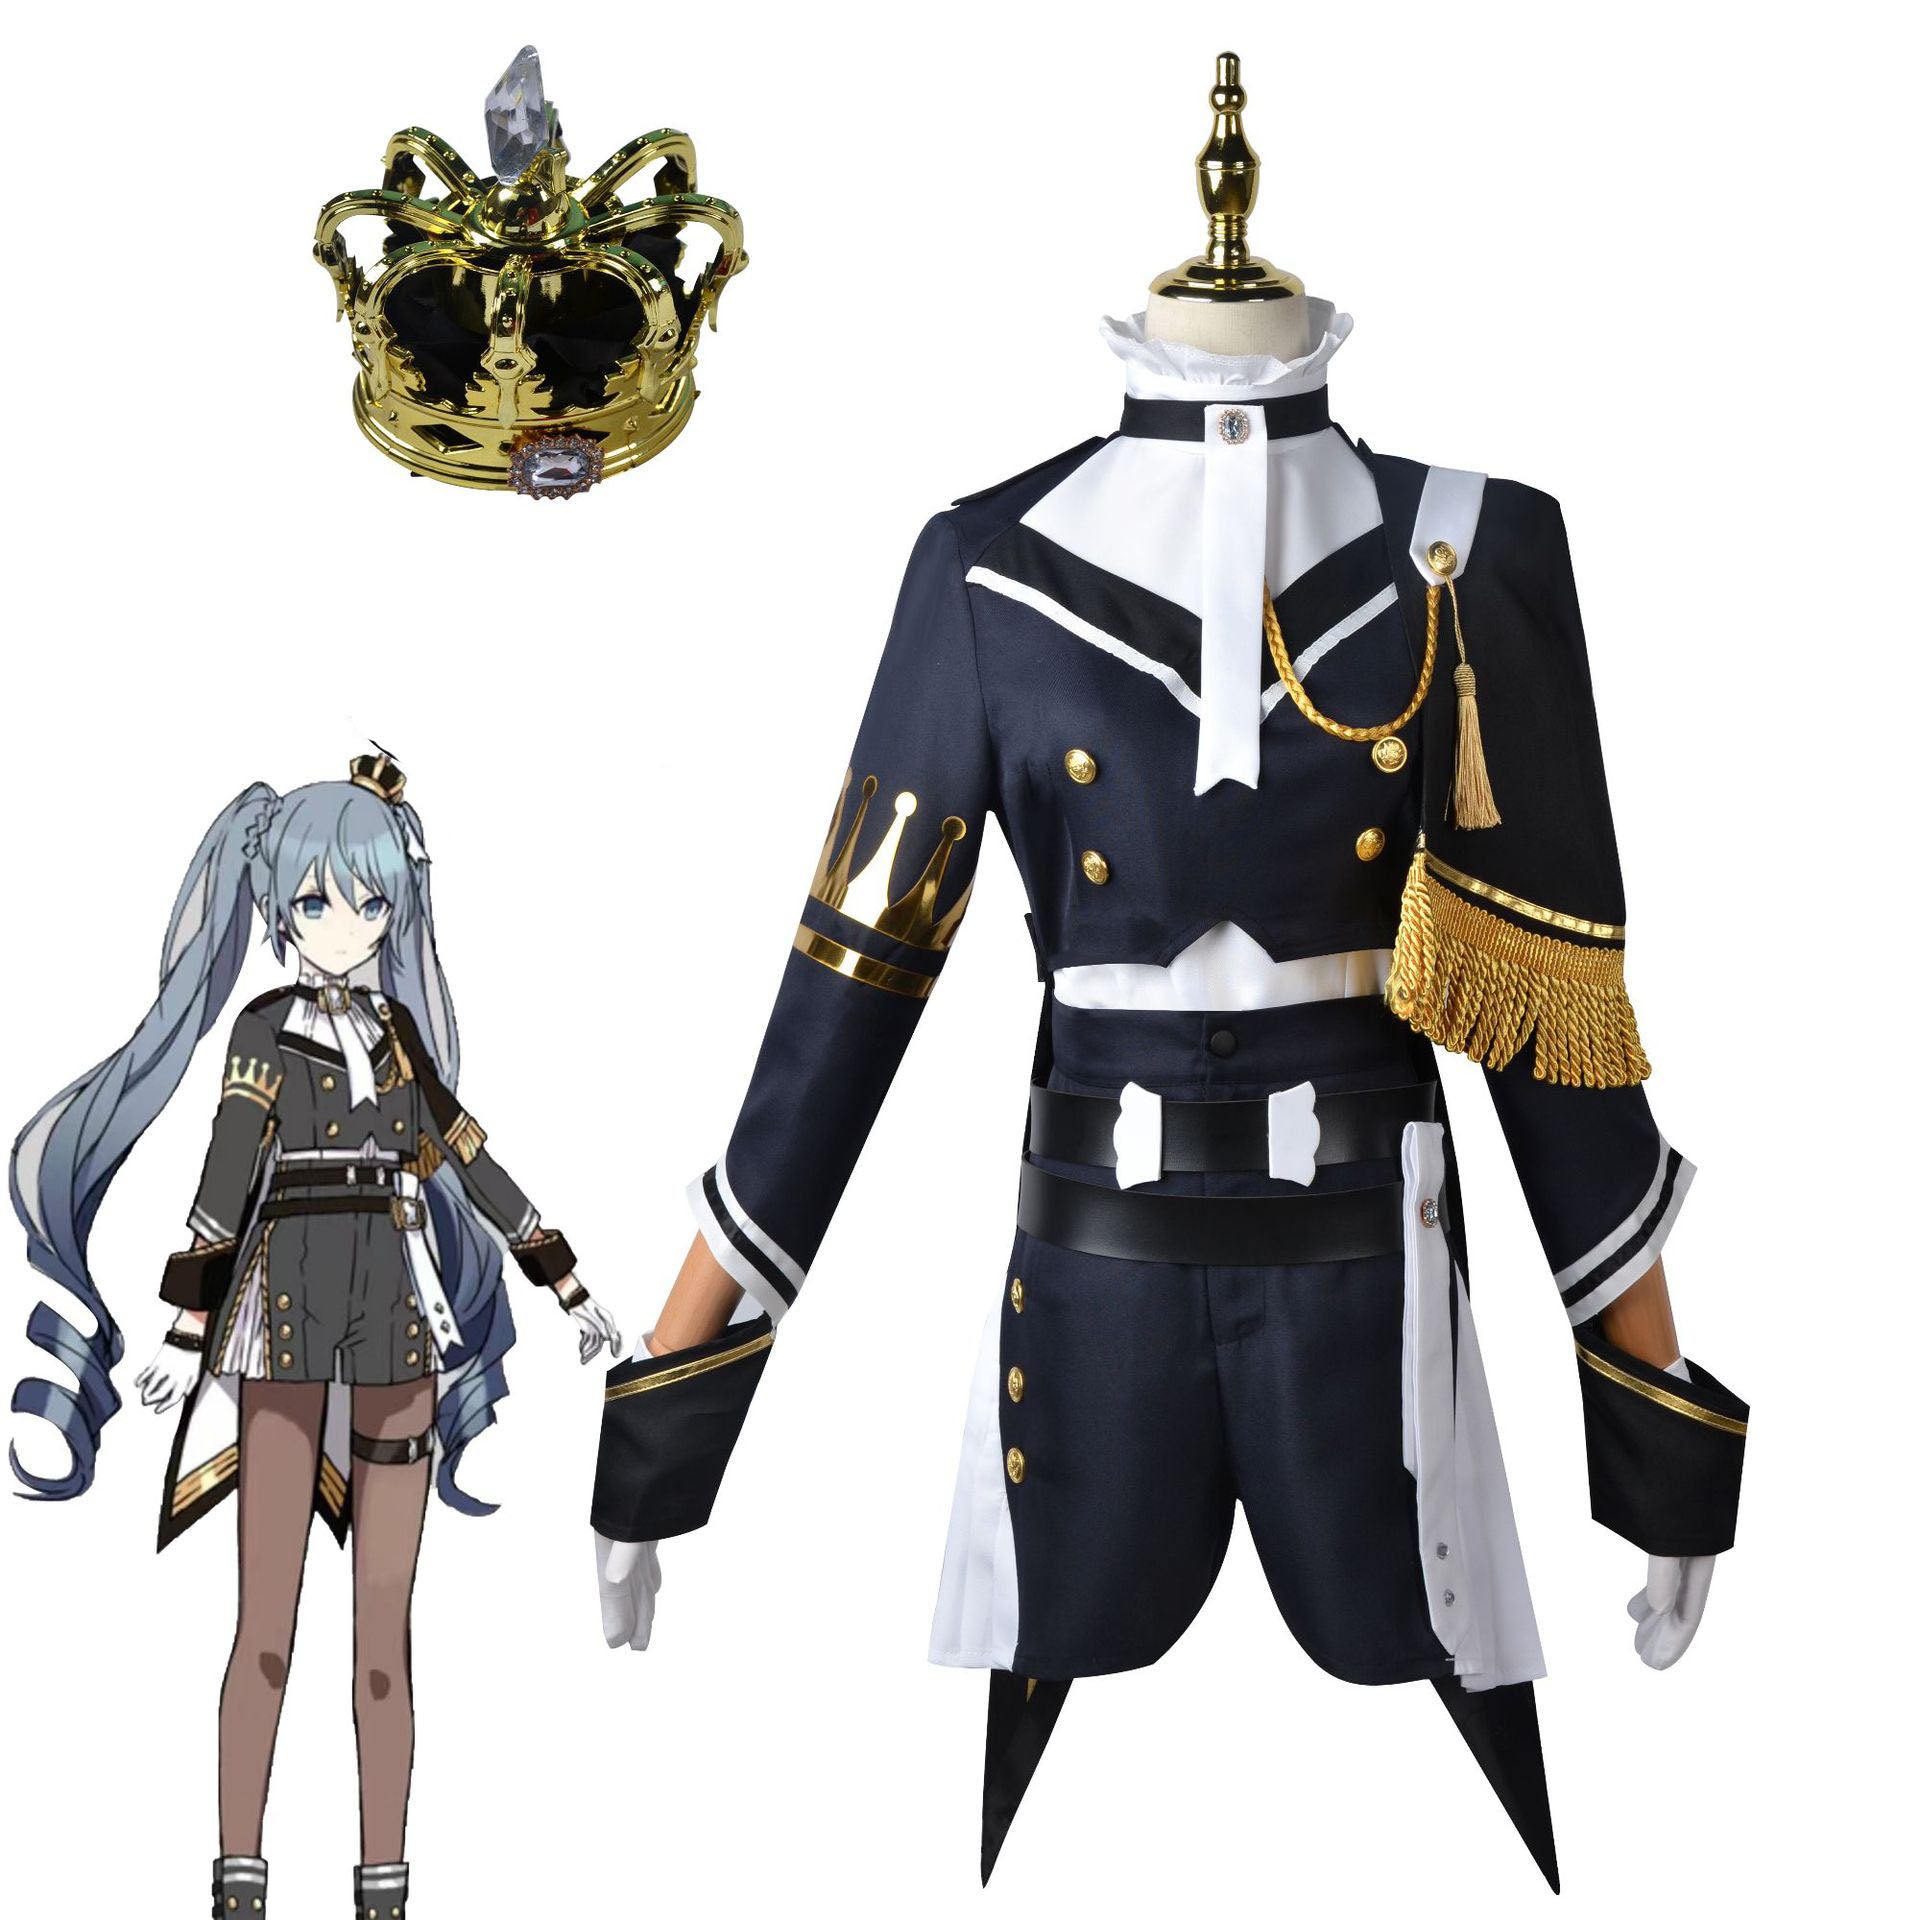 Rulercosplay Vocaloid Miku Military Uniform Cosplay Costume